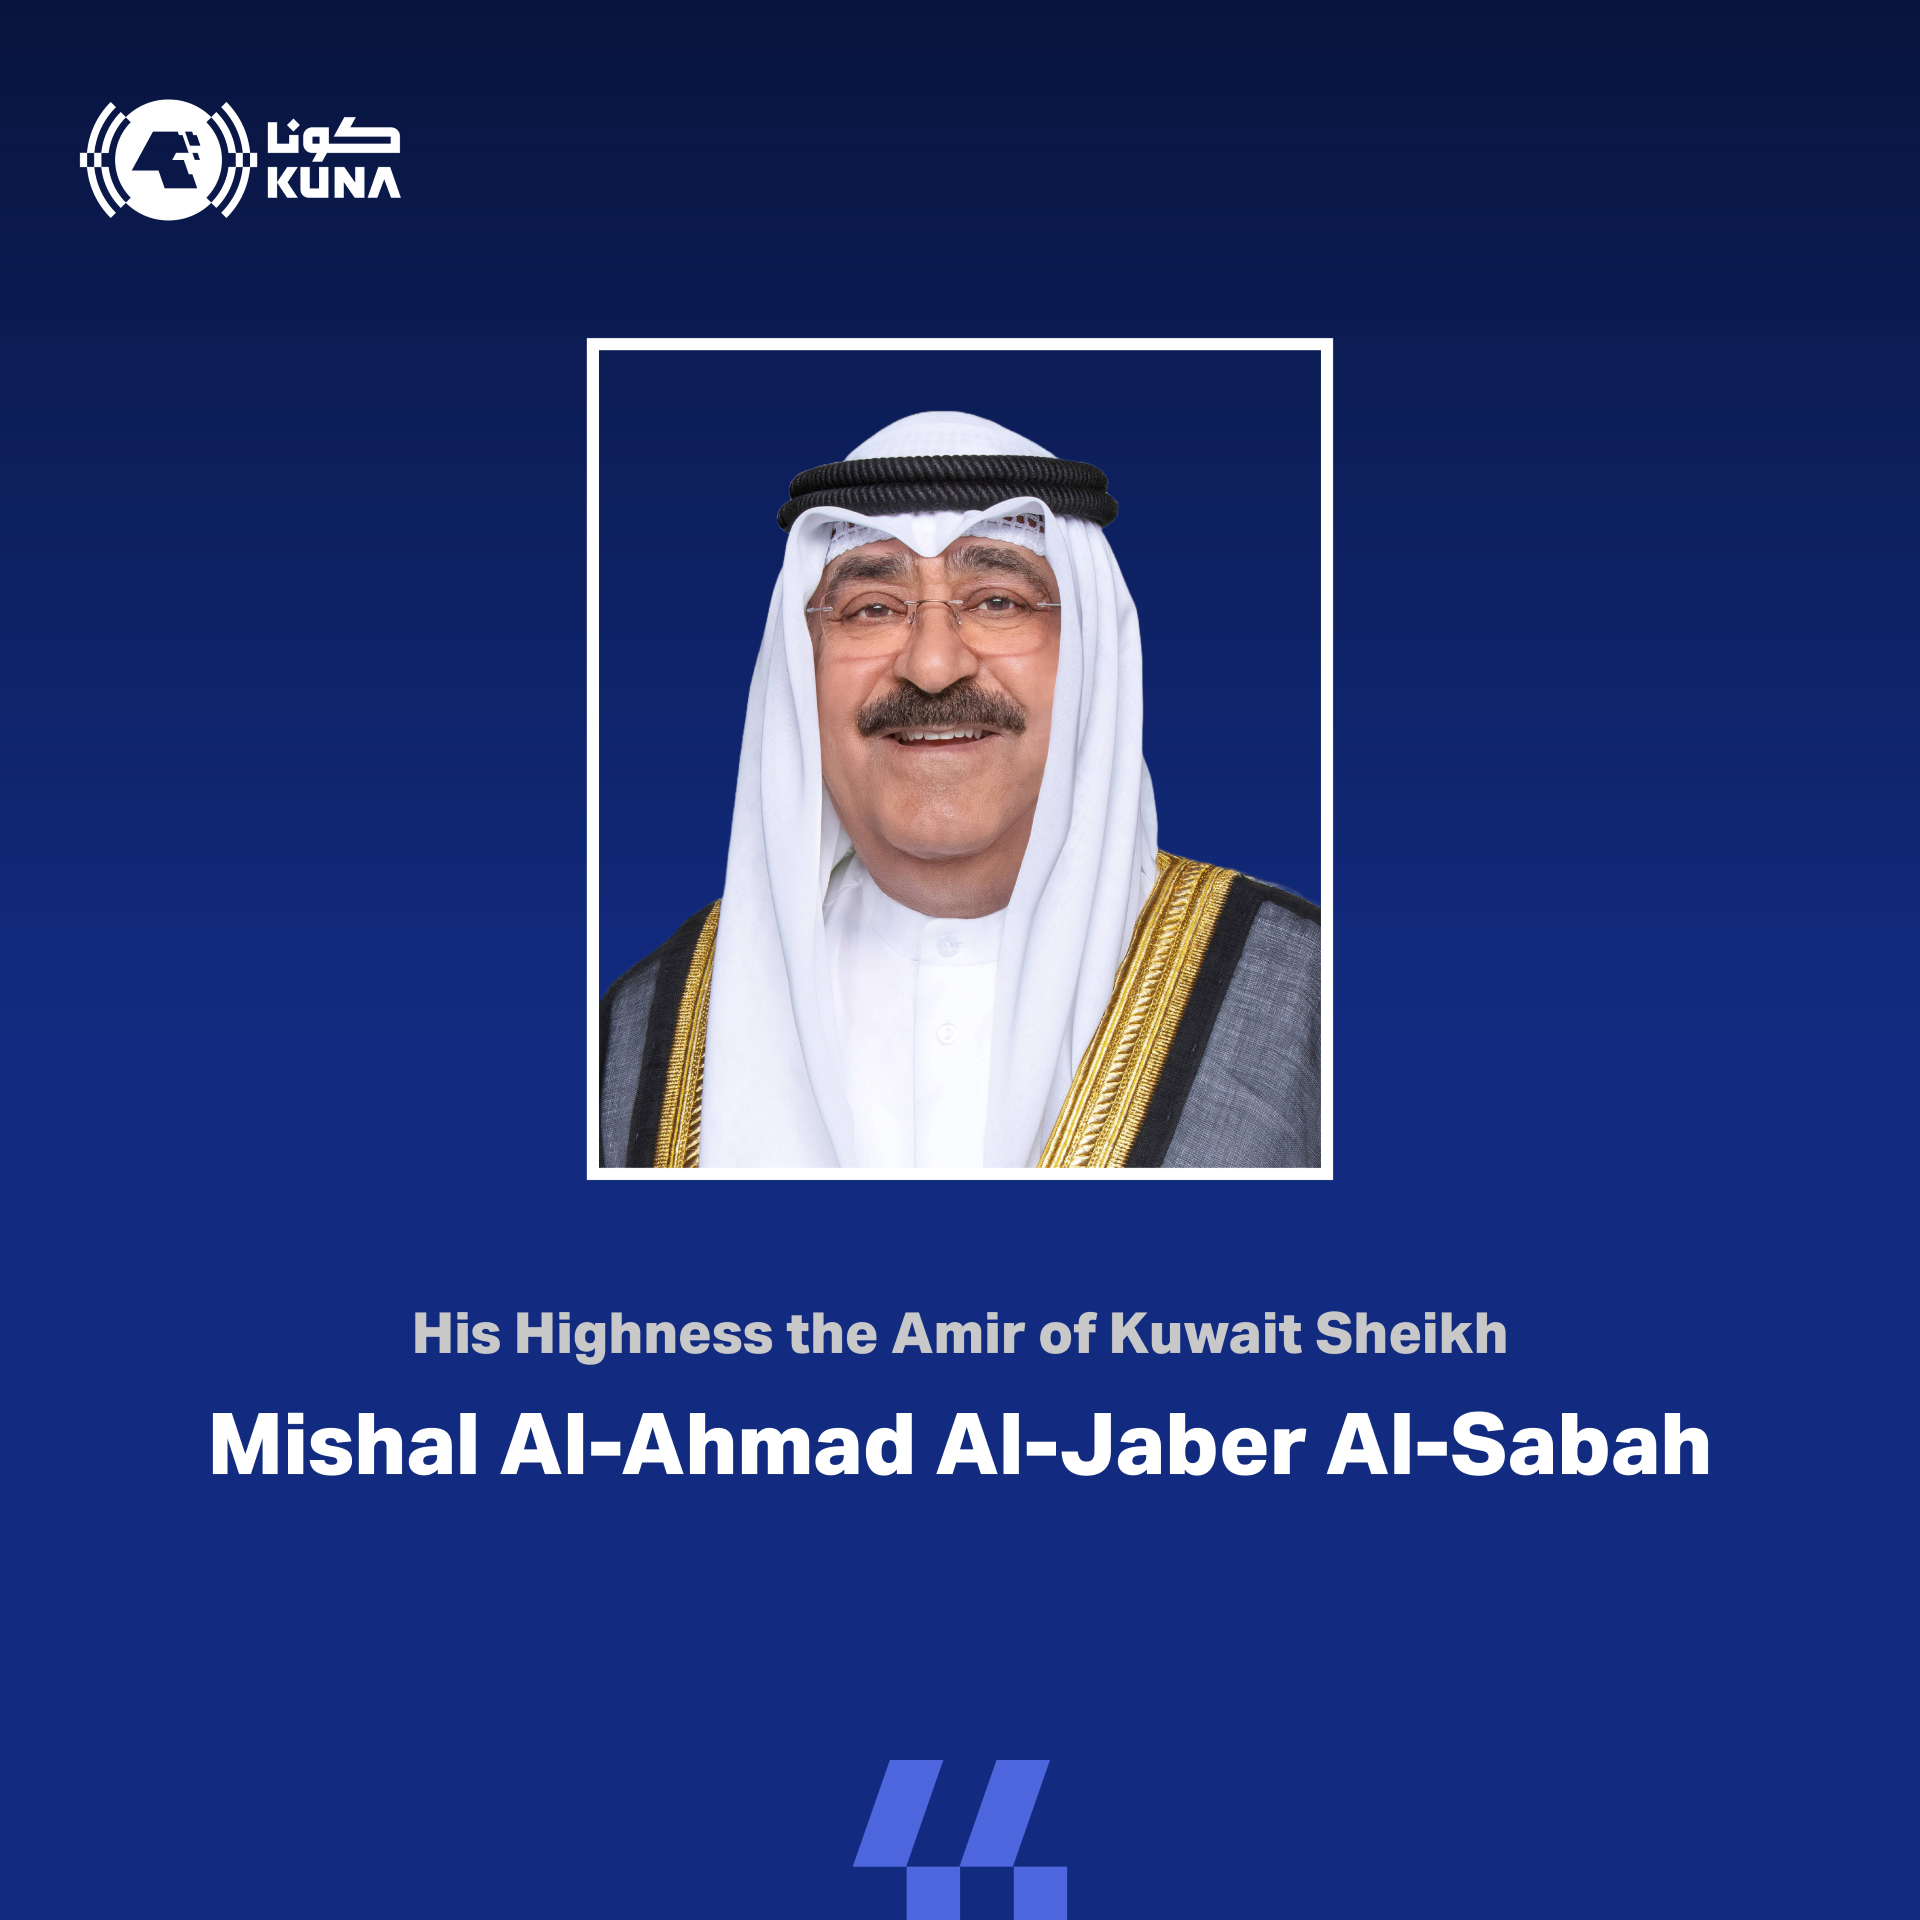 His Highness the Amir Sheikh Mishal Al-Ahmad Al-Jaber Al-Sabah